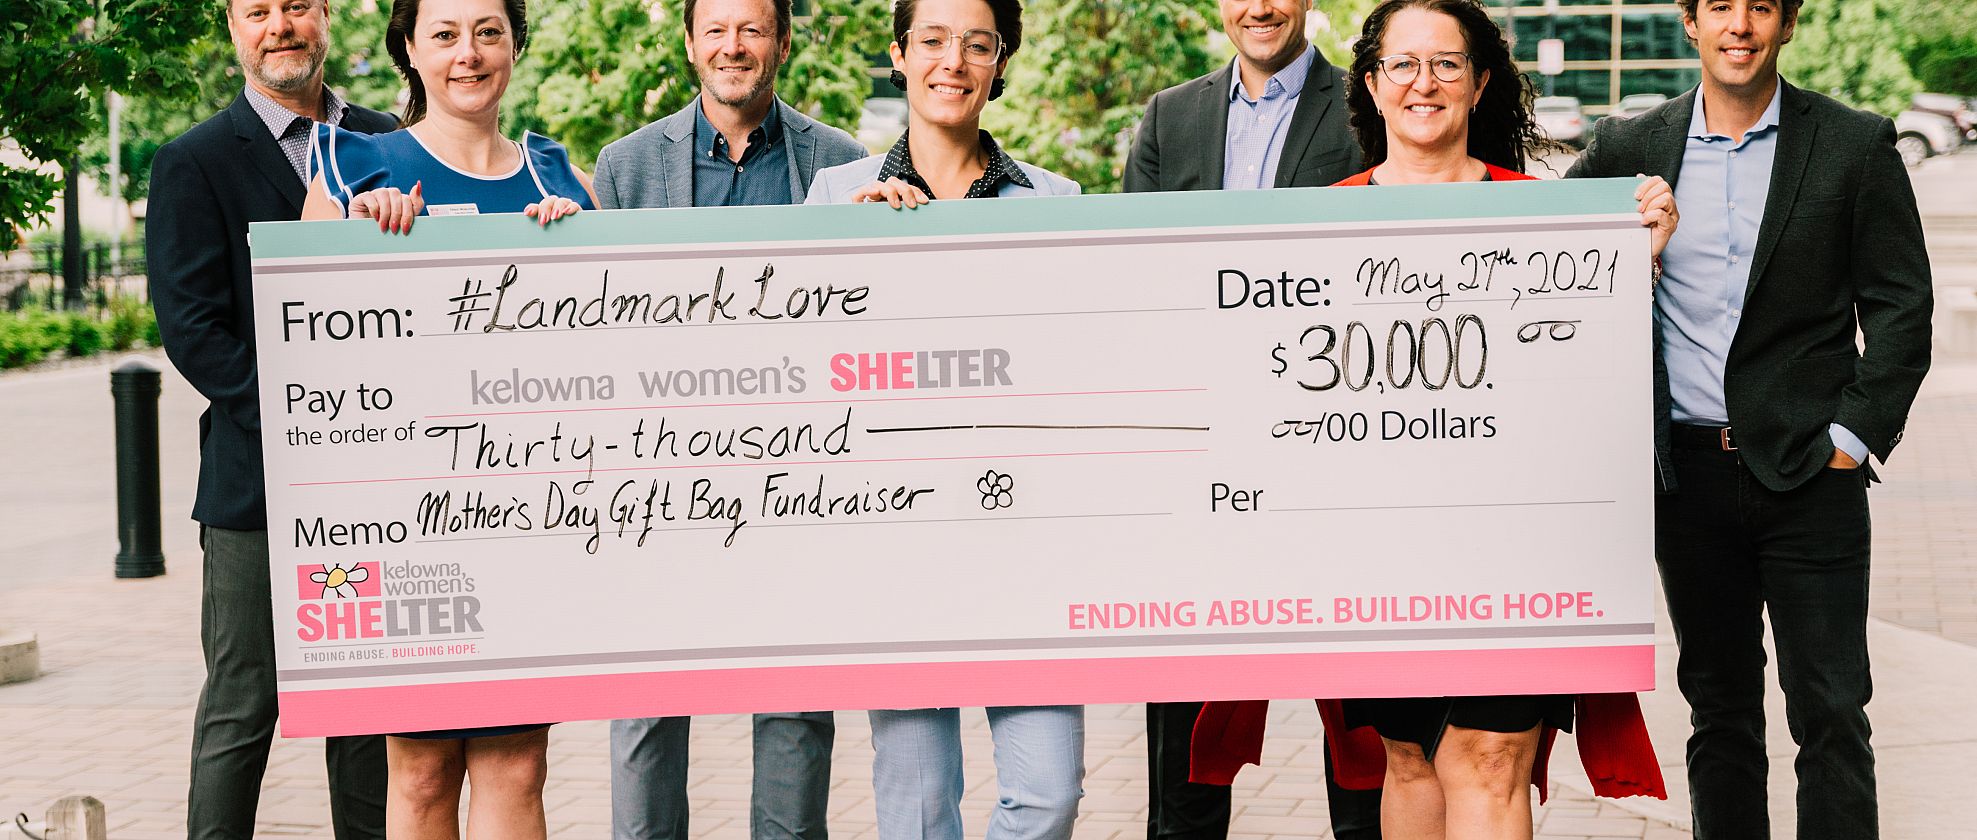 LandmarkLove Mother’s Day Gift Tote fundraiser brings $30K